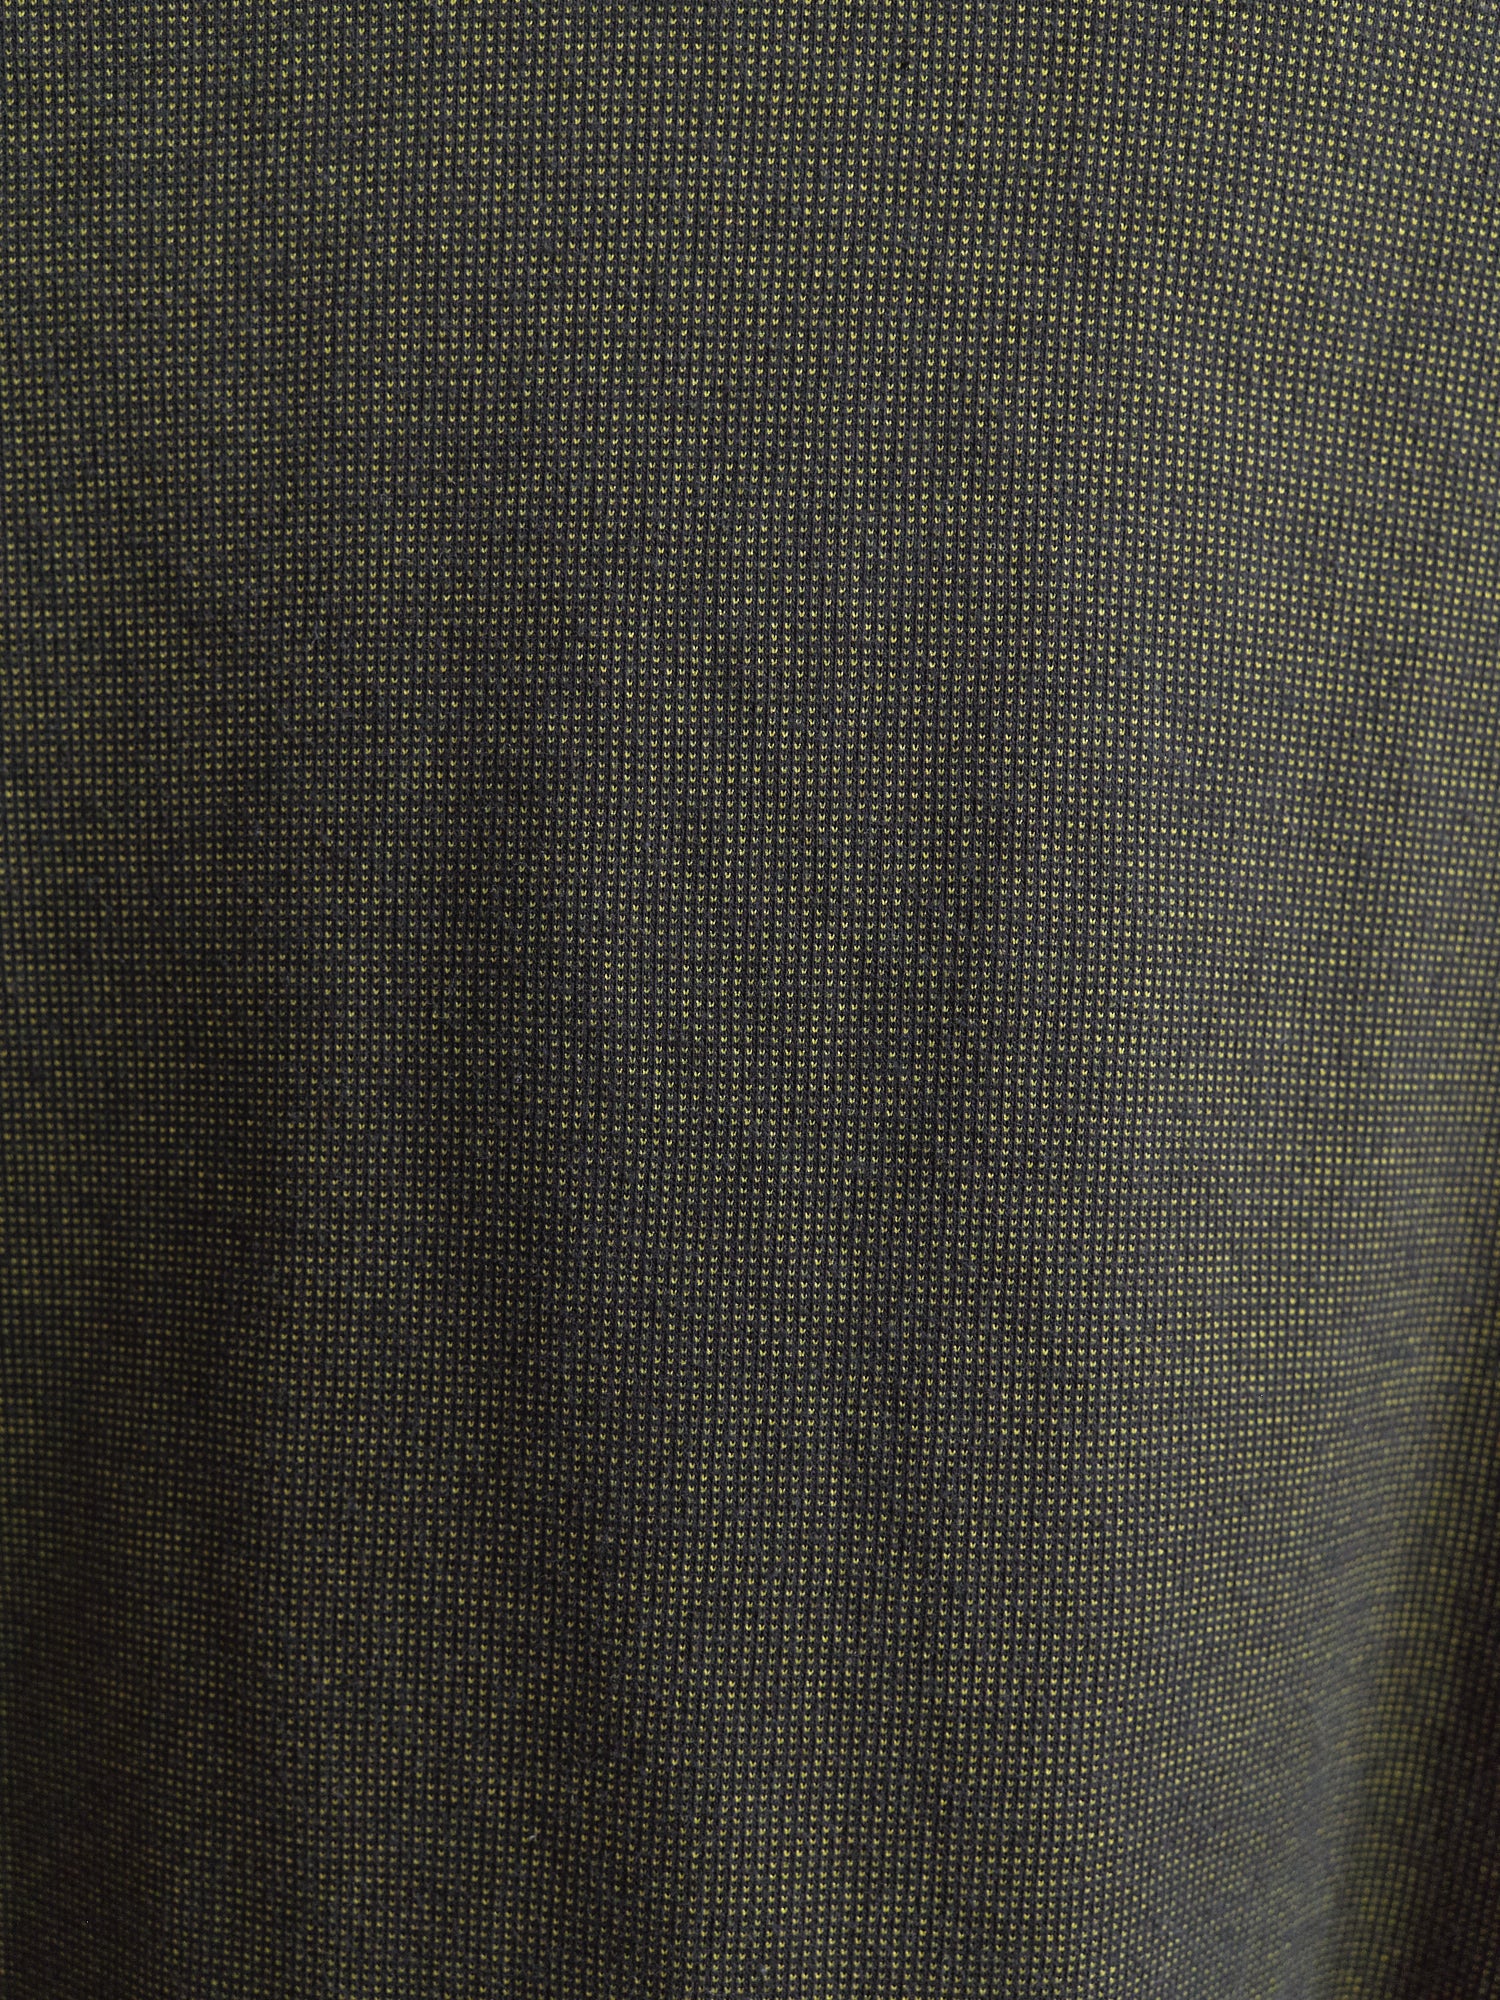 Yohji Yamamoto AAR 1990s green cotton blend irridescent polo shirt - mens XS S